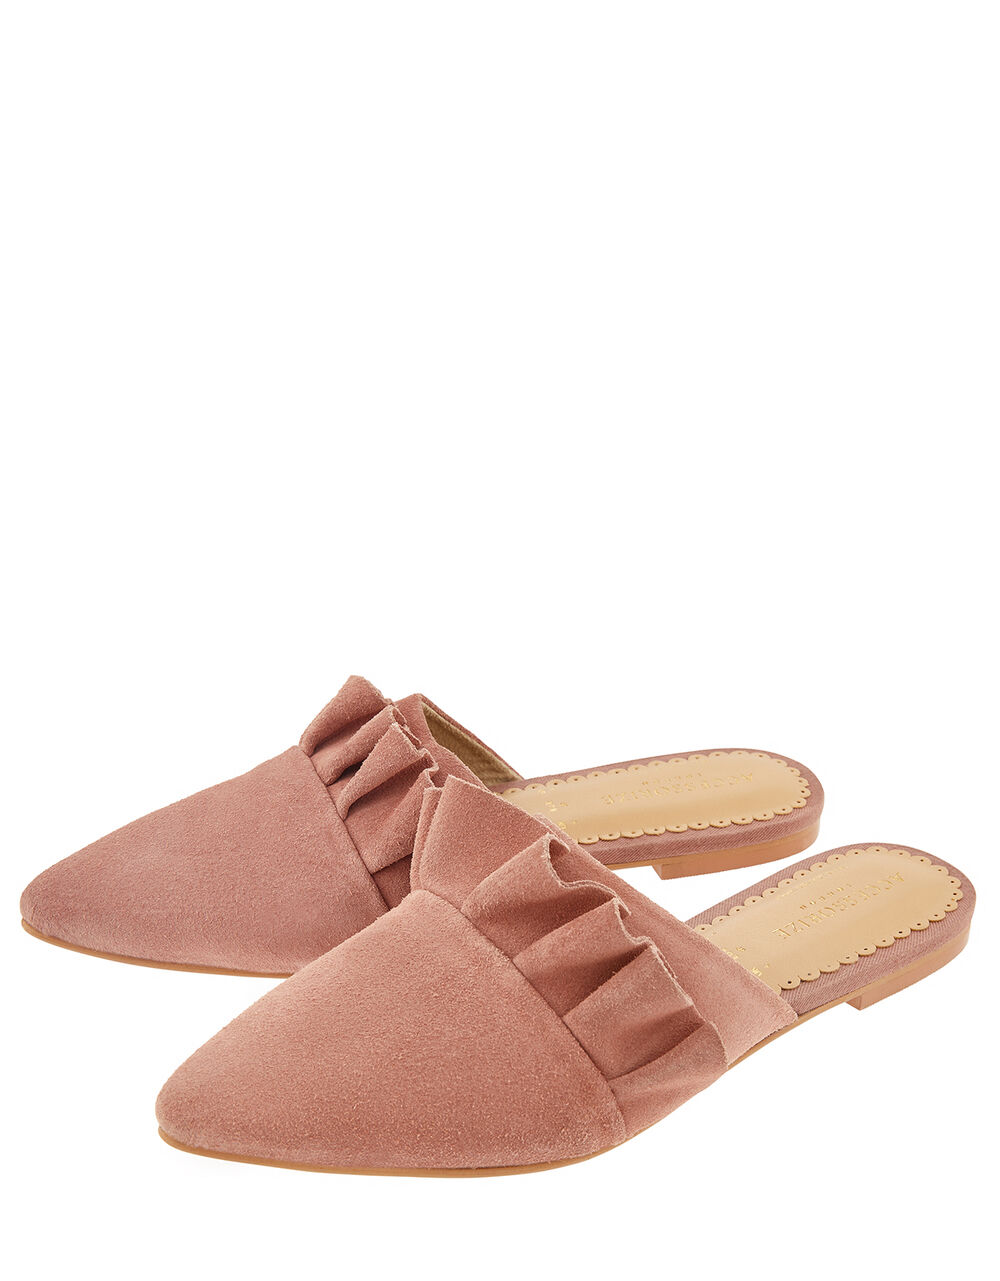 Kiera Suede Mules Pink | Flat shoes | Accessorize UK